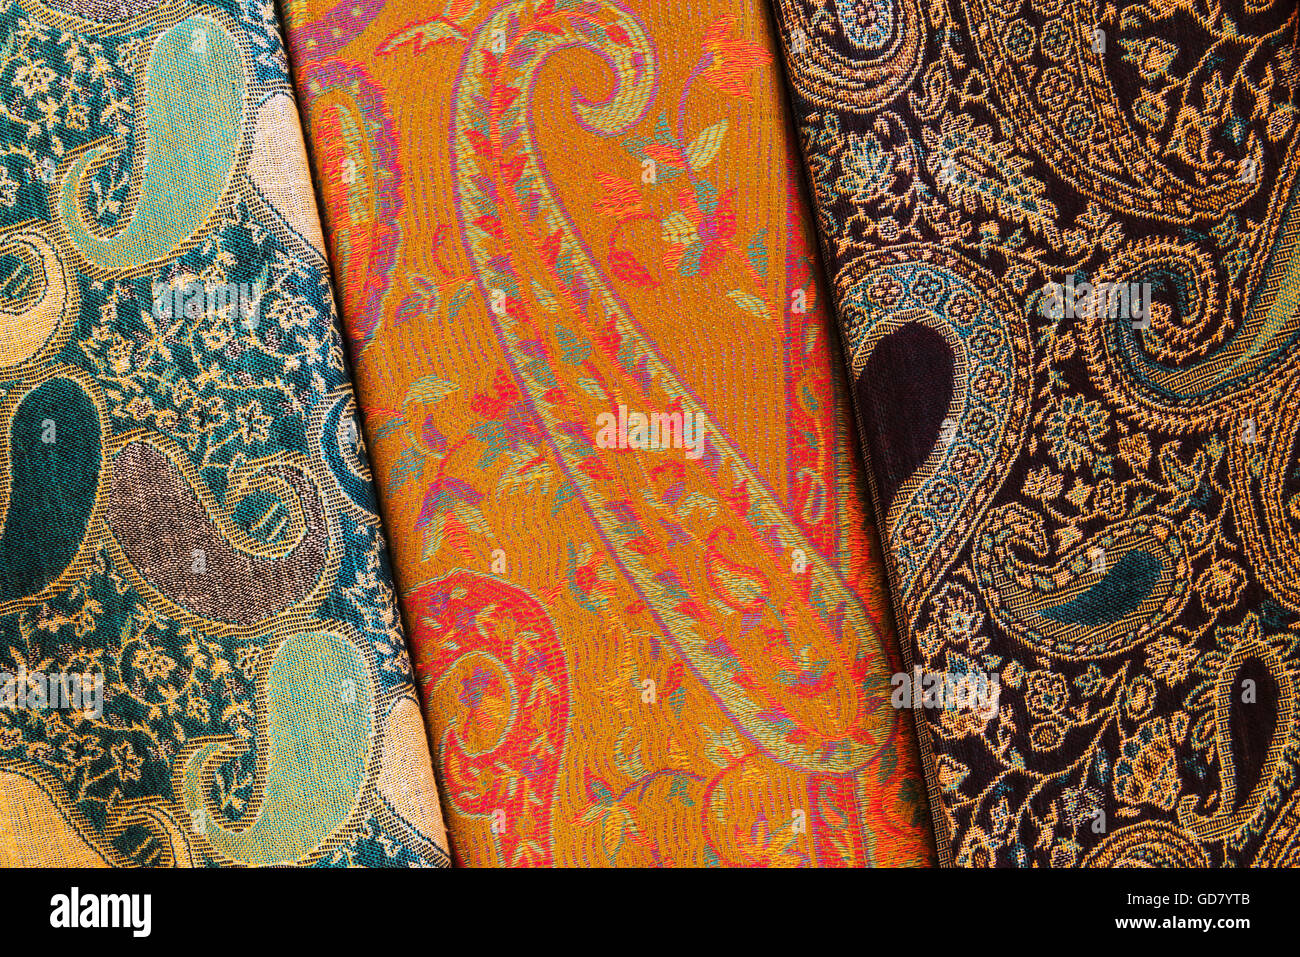 Closeup of colorful pashmina shawls. Stock Photo